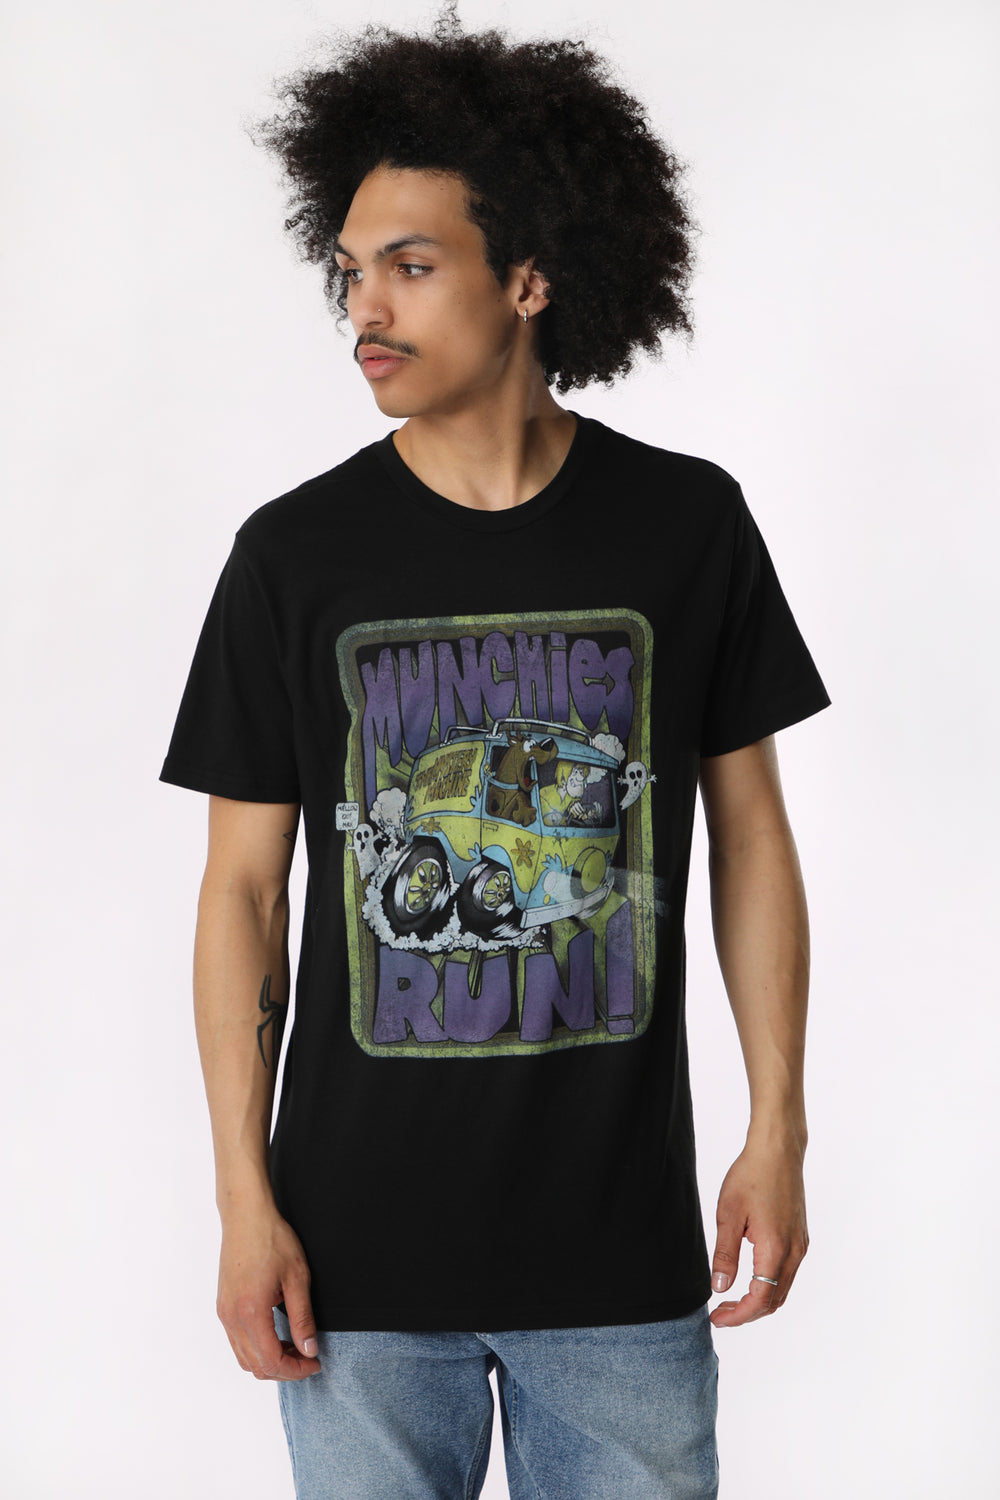 T-Shirt Imprimé Munchies Run Scooby-Doo Homme T-Shirt Imprimé Munchies Run Scooby-Doo Homme